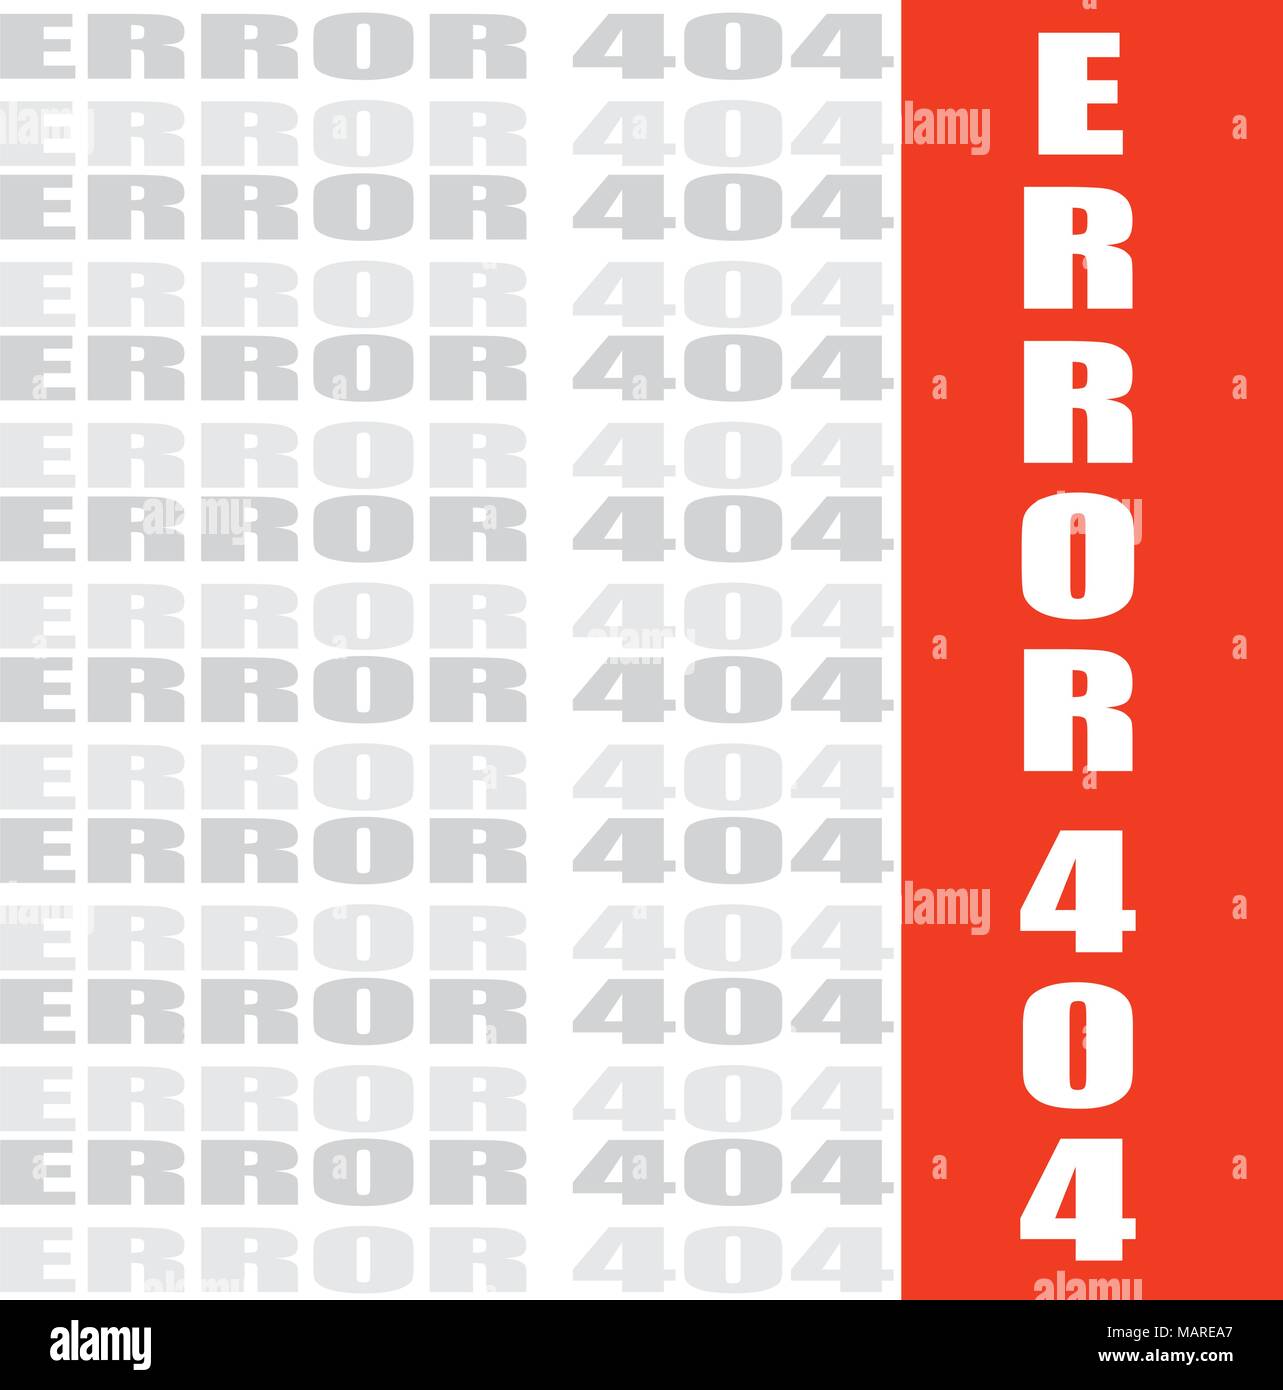 404 Erreur de mot, vector background Illustration de Vecteur